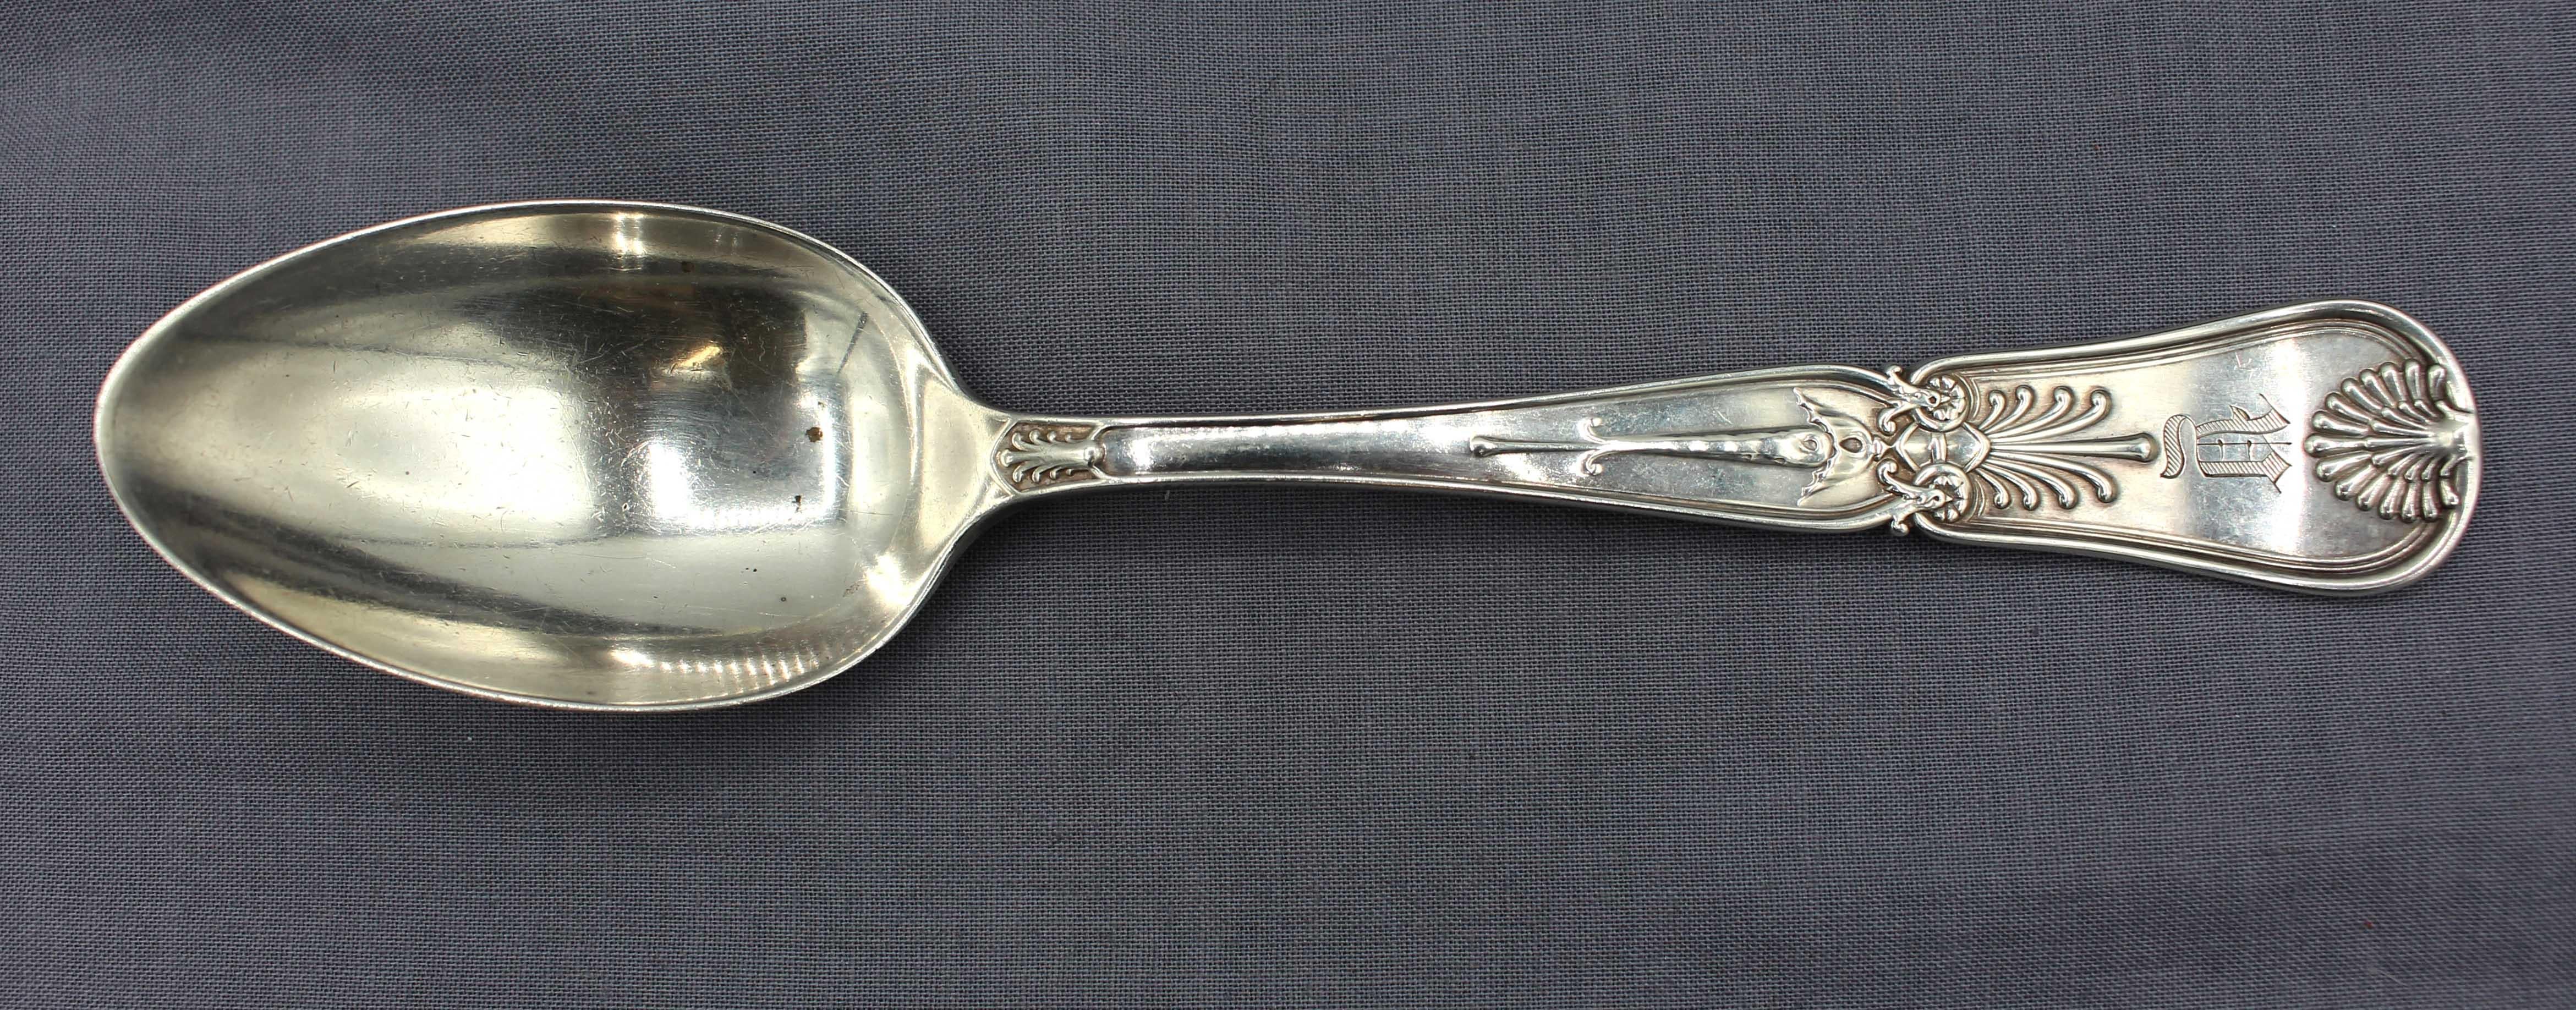 rw sterling spoon